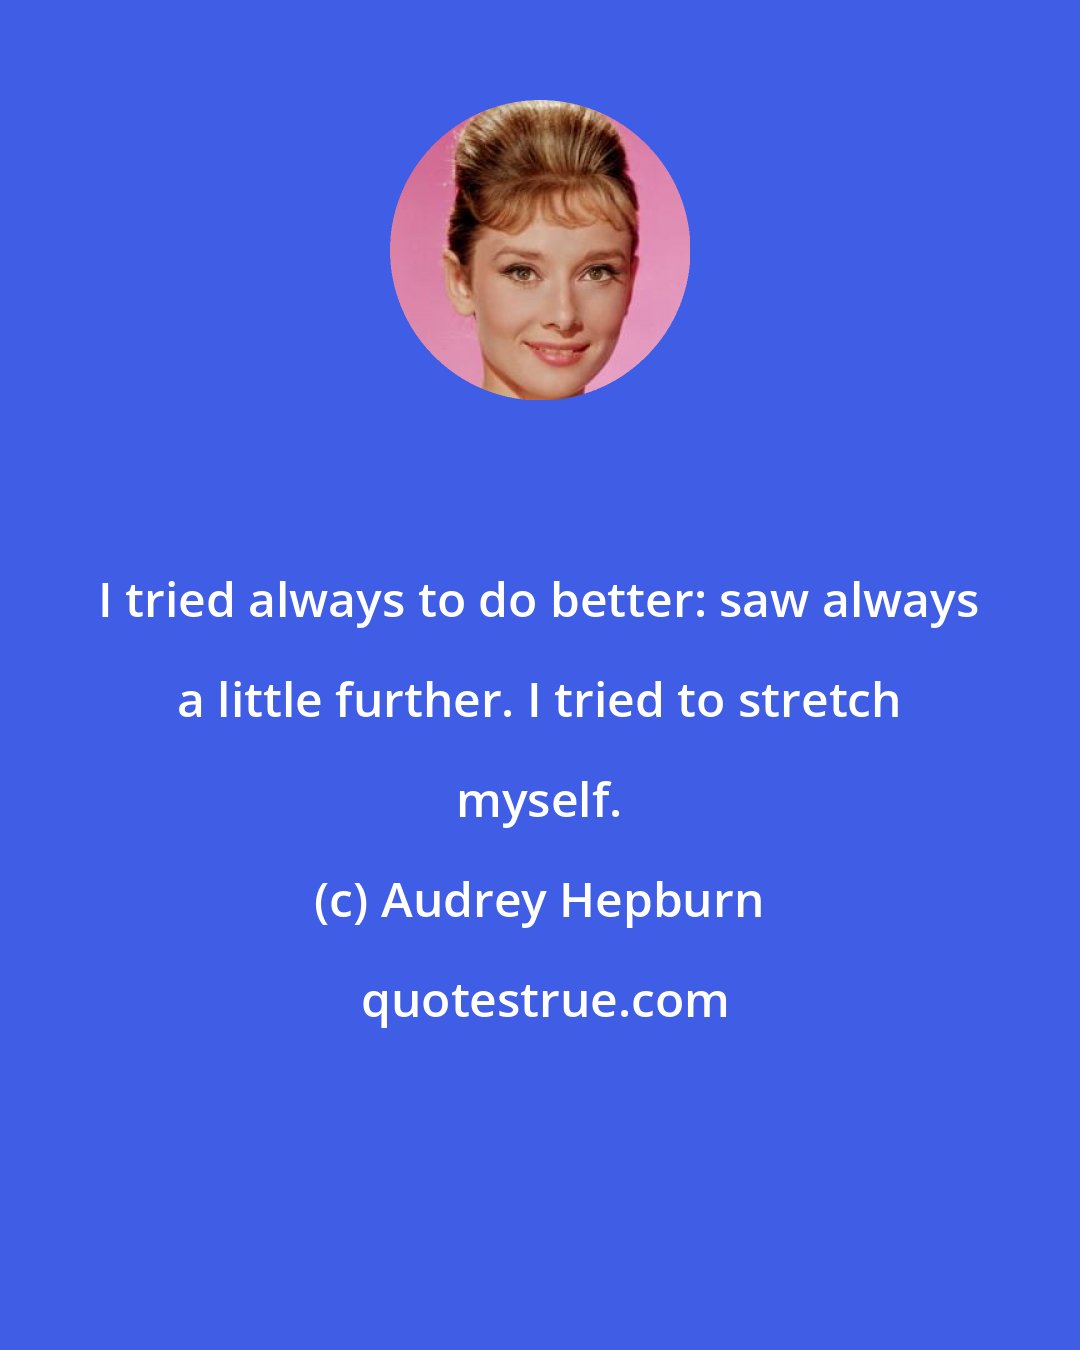 Audrey Hepburn: I tried always to do better: saw always a little further. I tried to stretch myself.